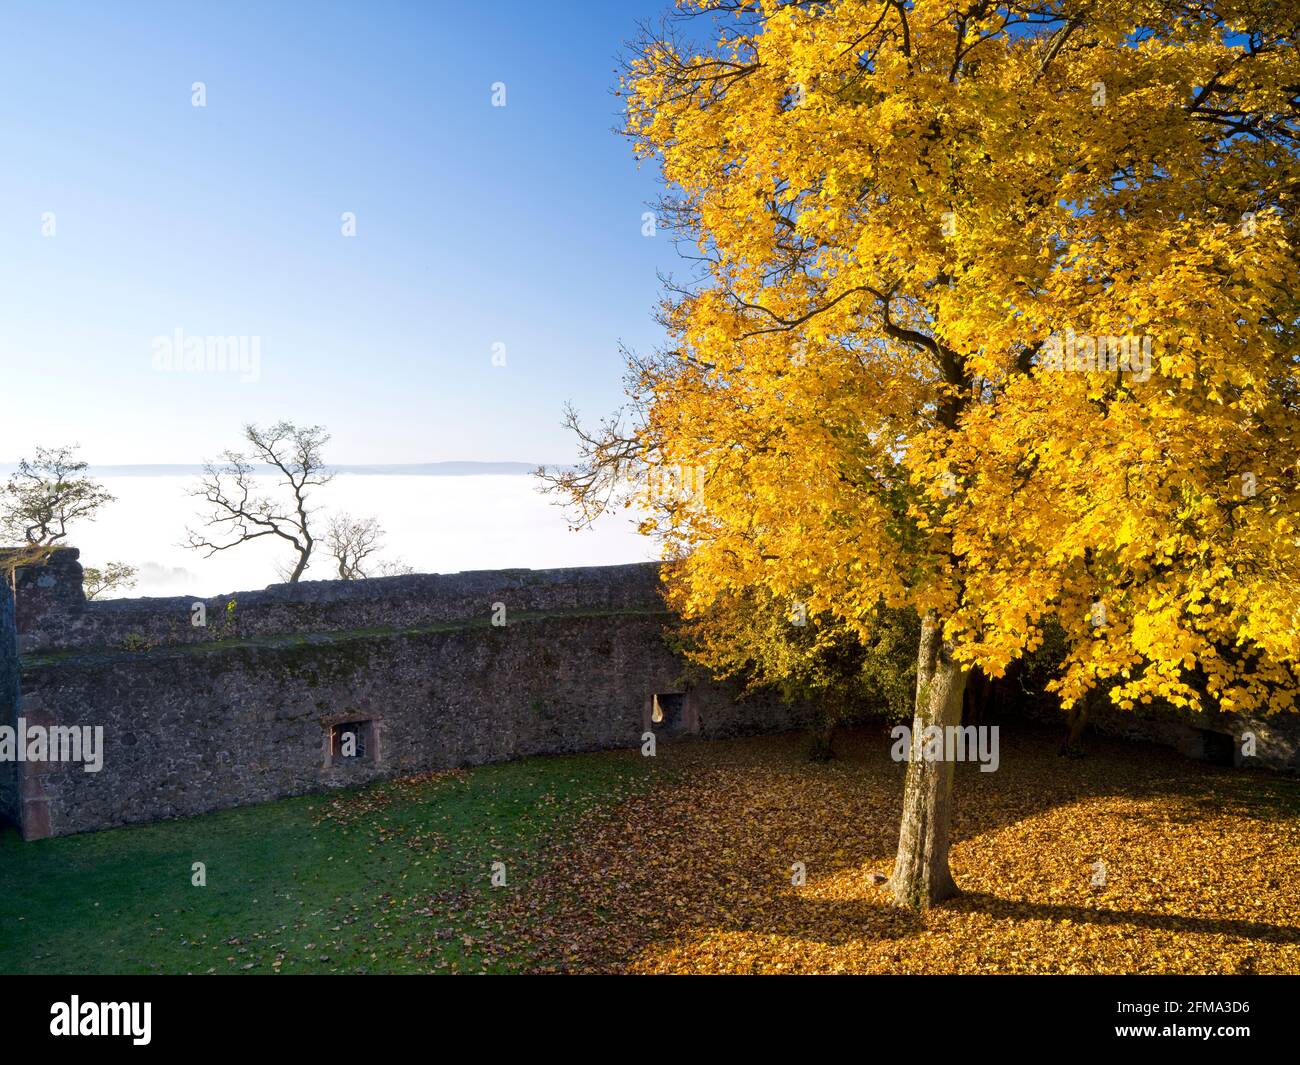 Europe, Germany, Hesse, Central Hesse, Marburg-Biedenkopf district, Amöneburg Basin, Amöneburg Castle, autumn-colored maple tree on the castle wall Stock Photo